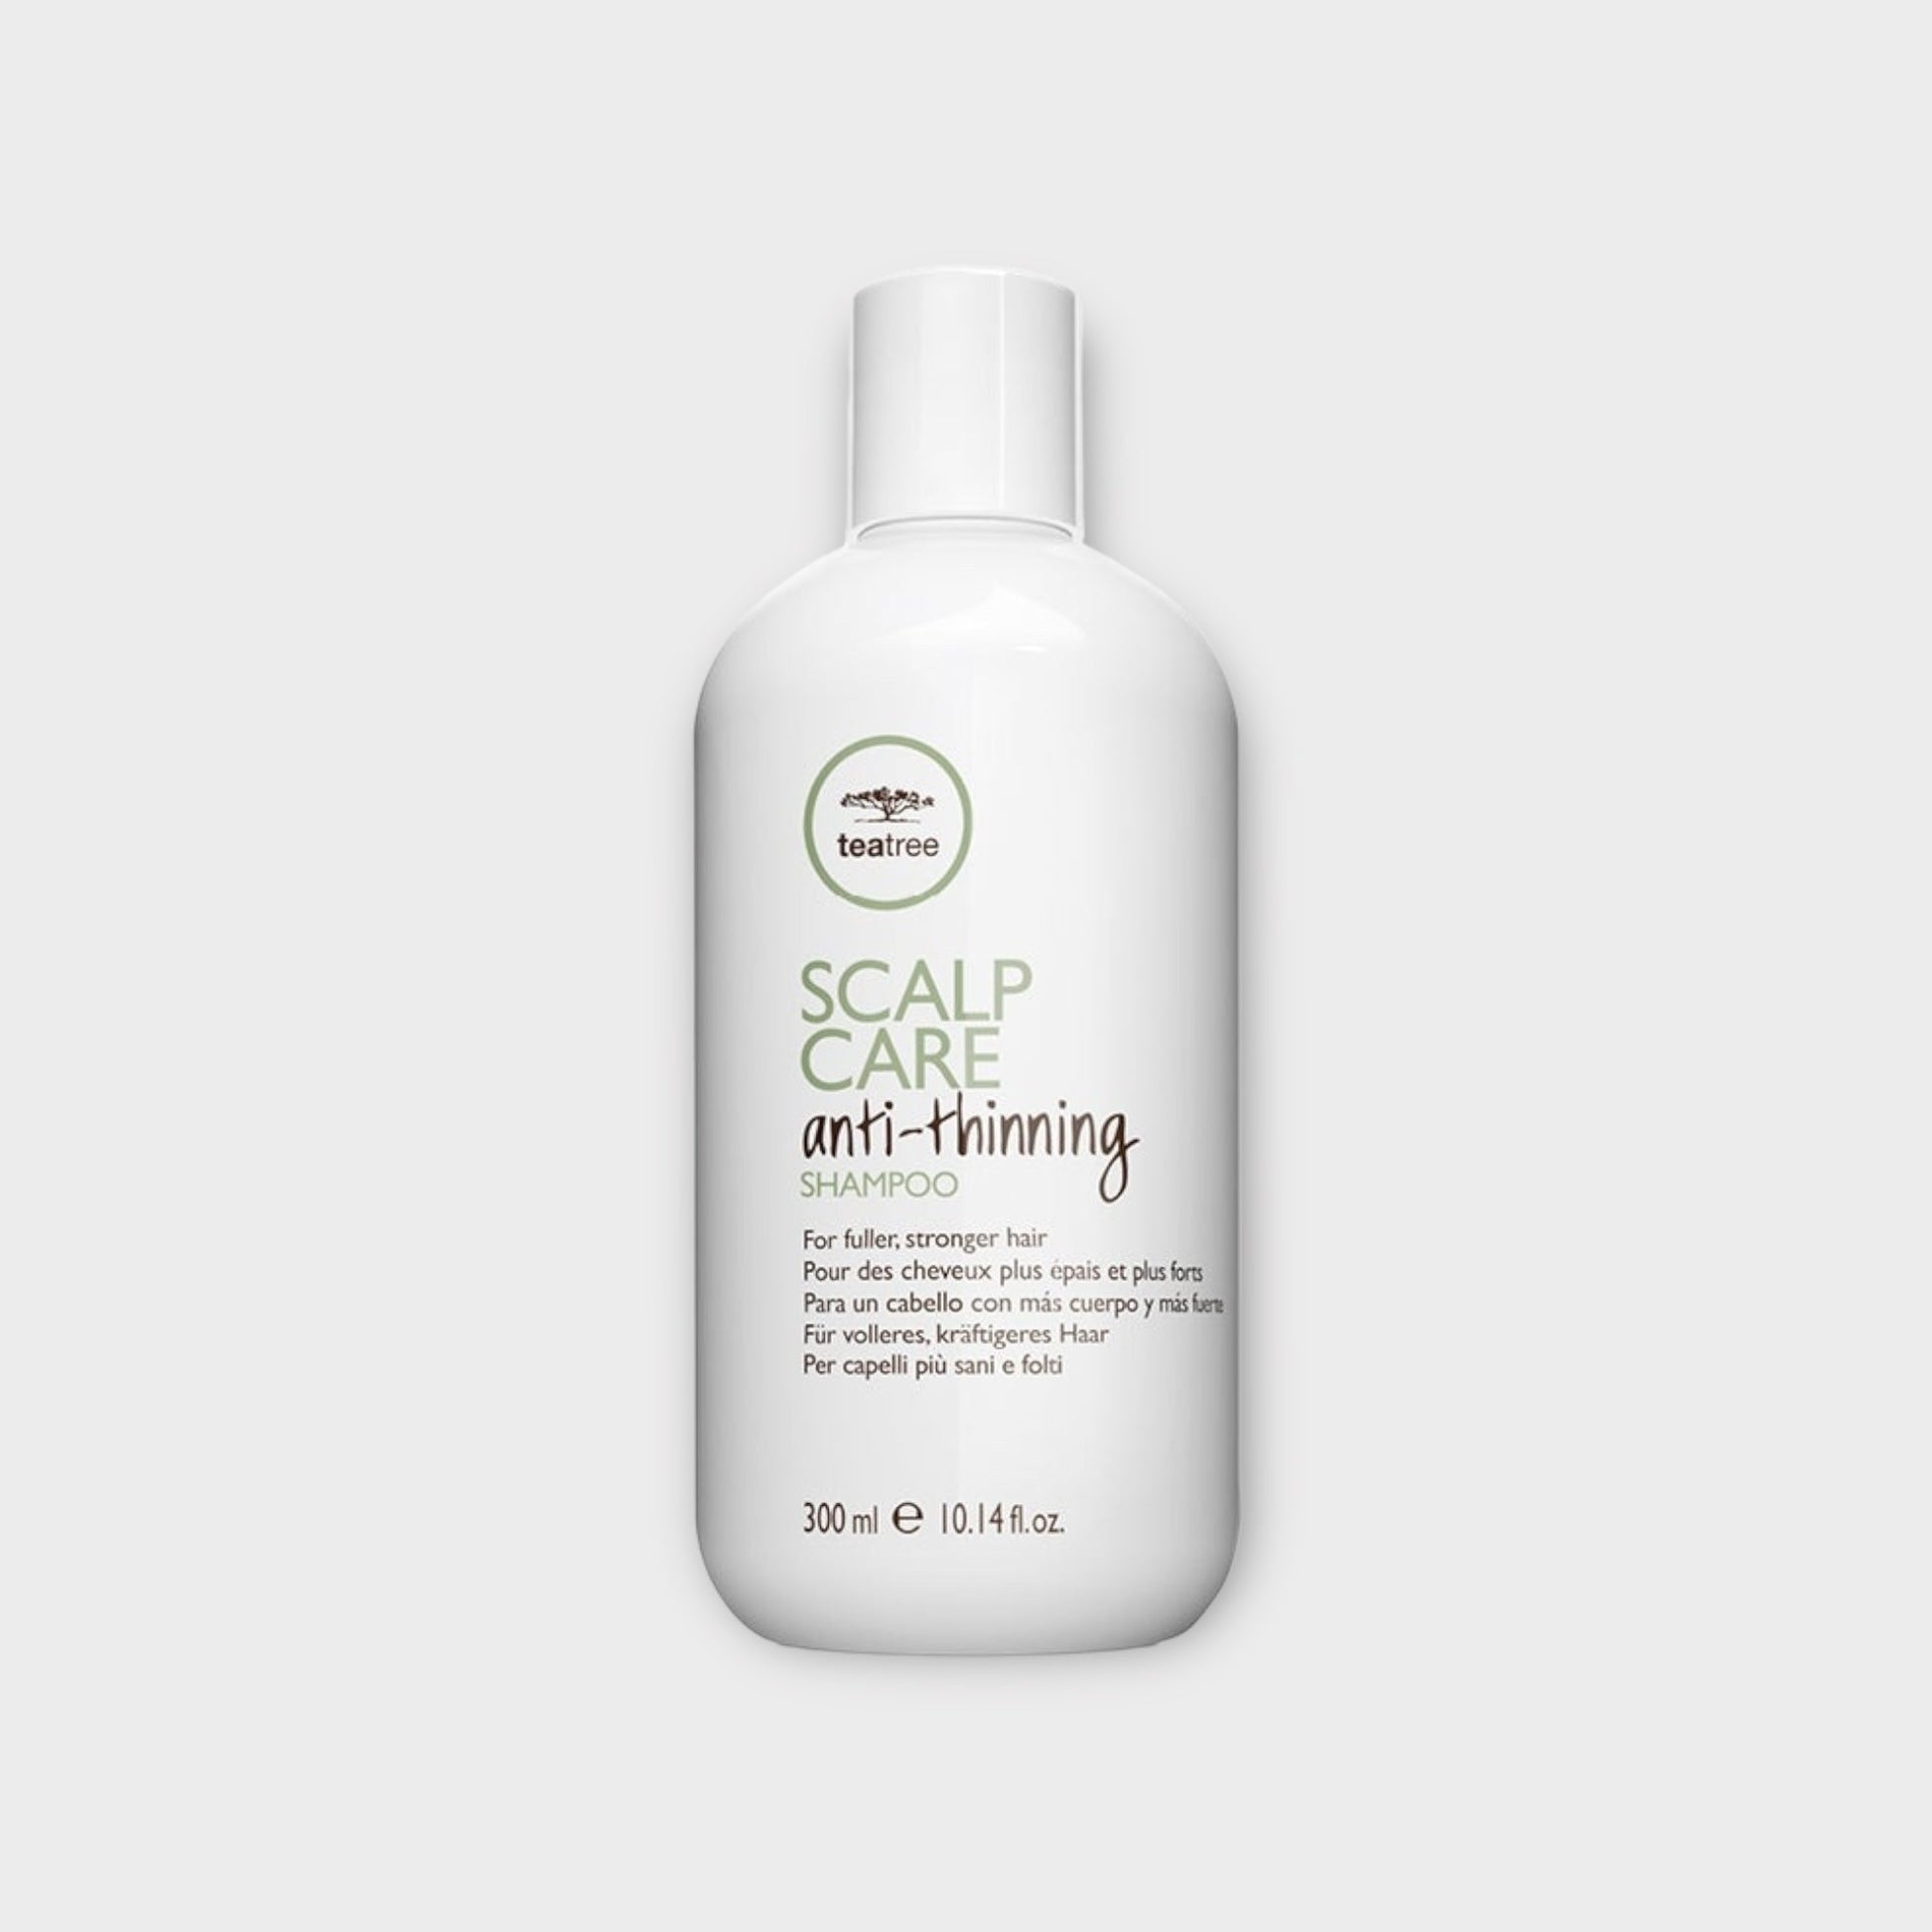 Tea Tree Scalp Care Anti-Thinning Shampoo - 300ml - Wash it Out